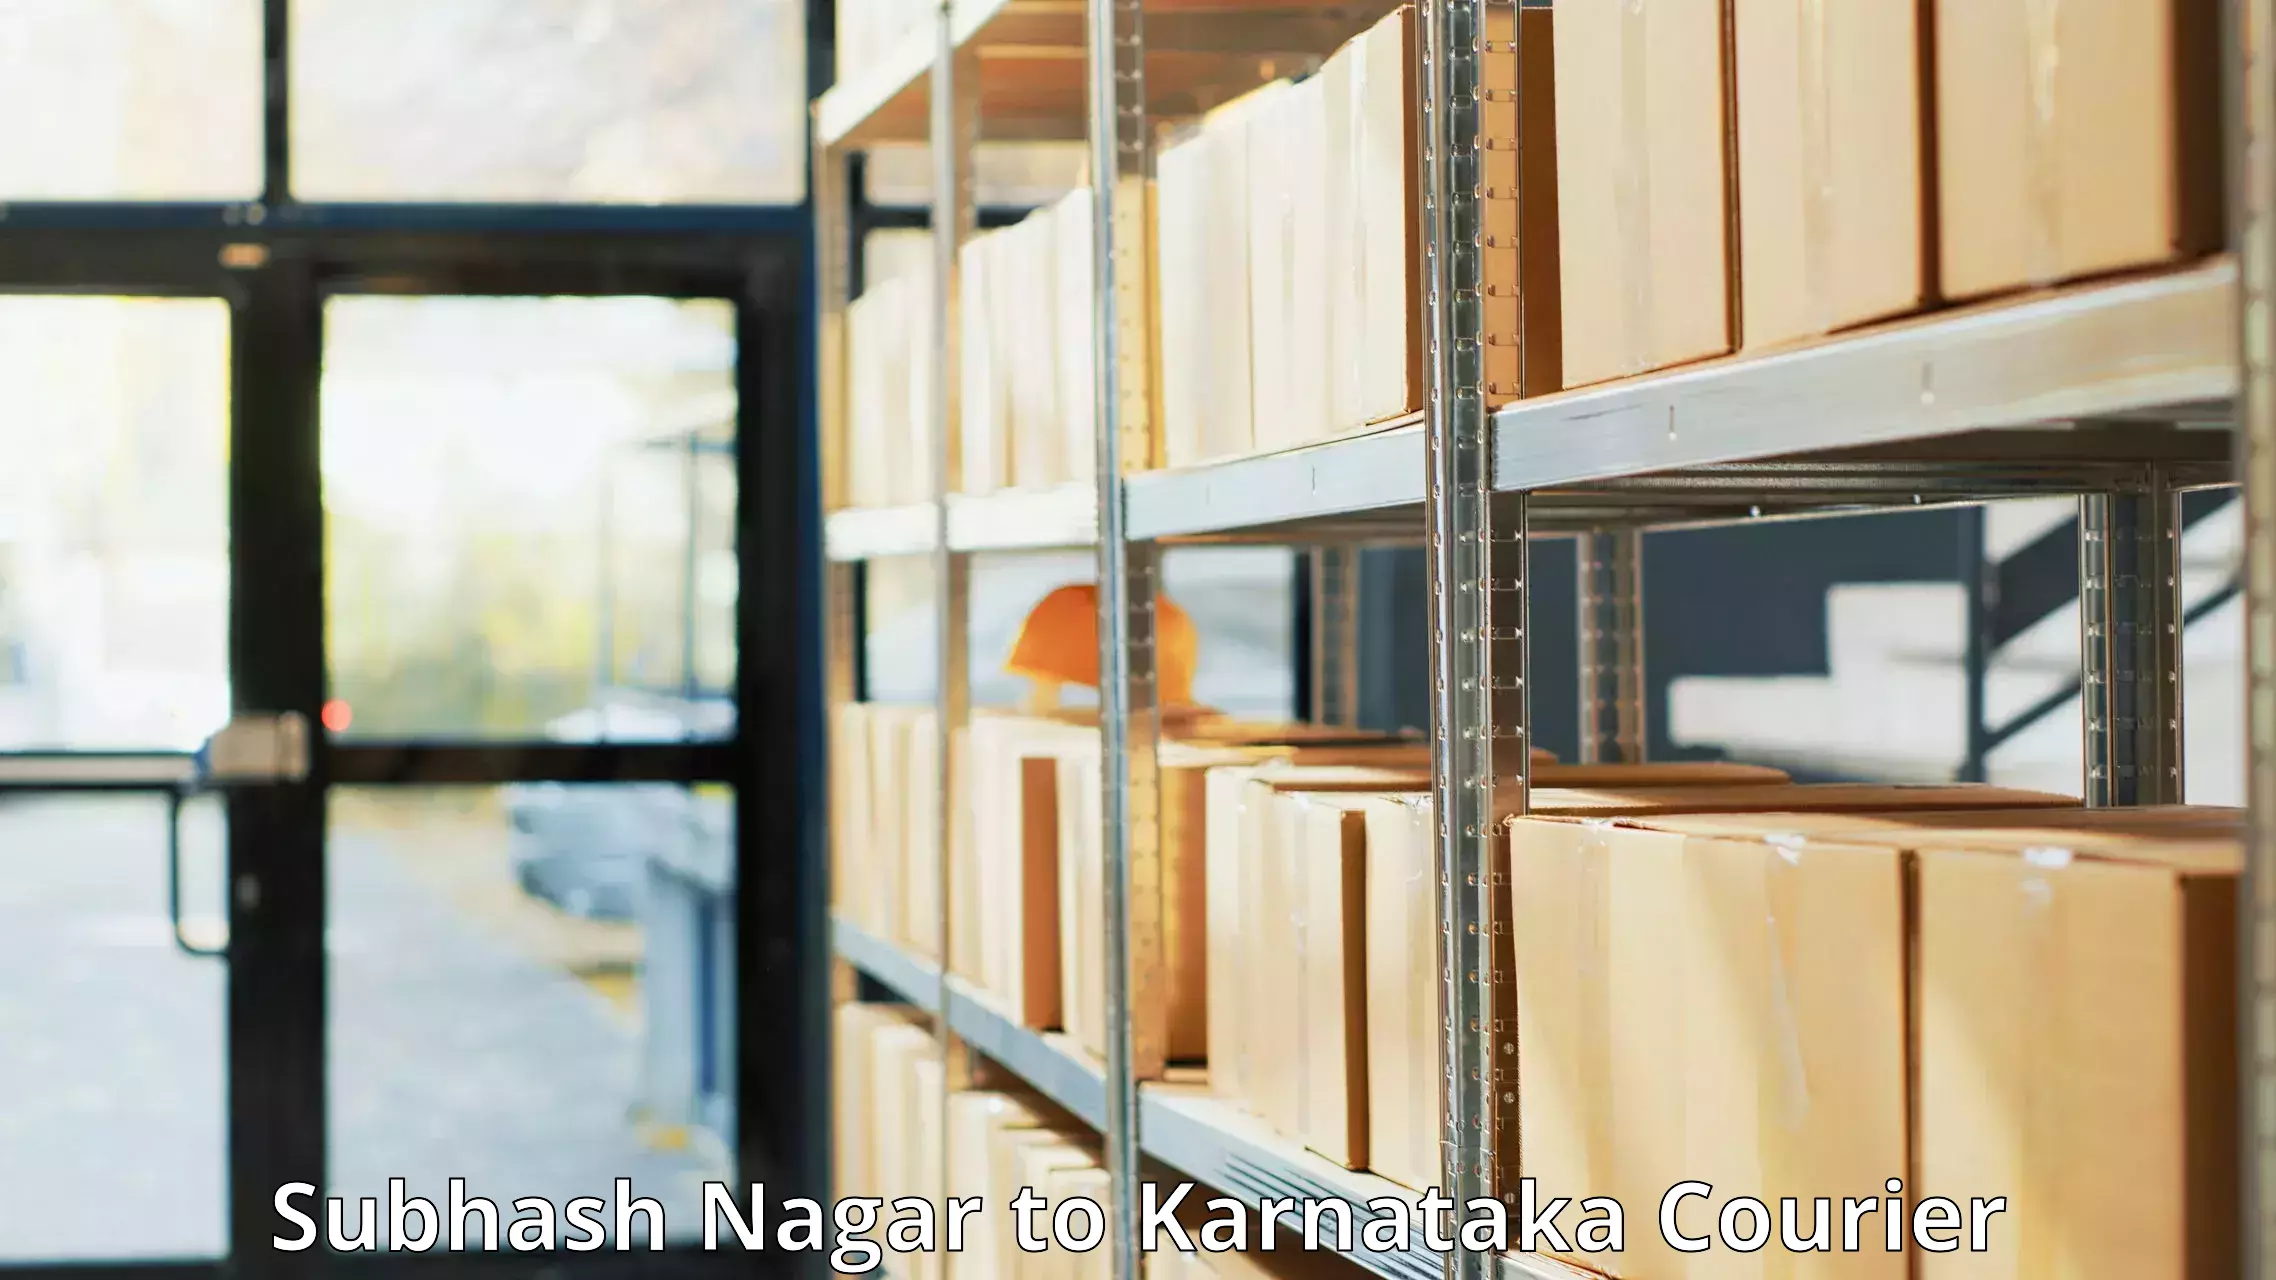 Digital courier platforms Subhash Nagar to Kushalnagar